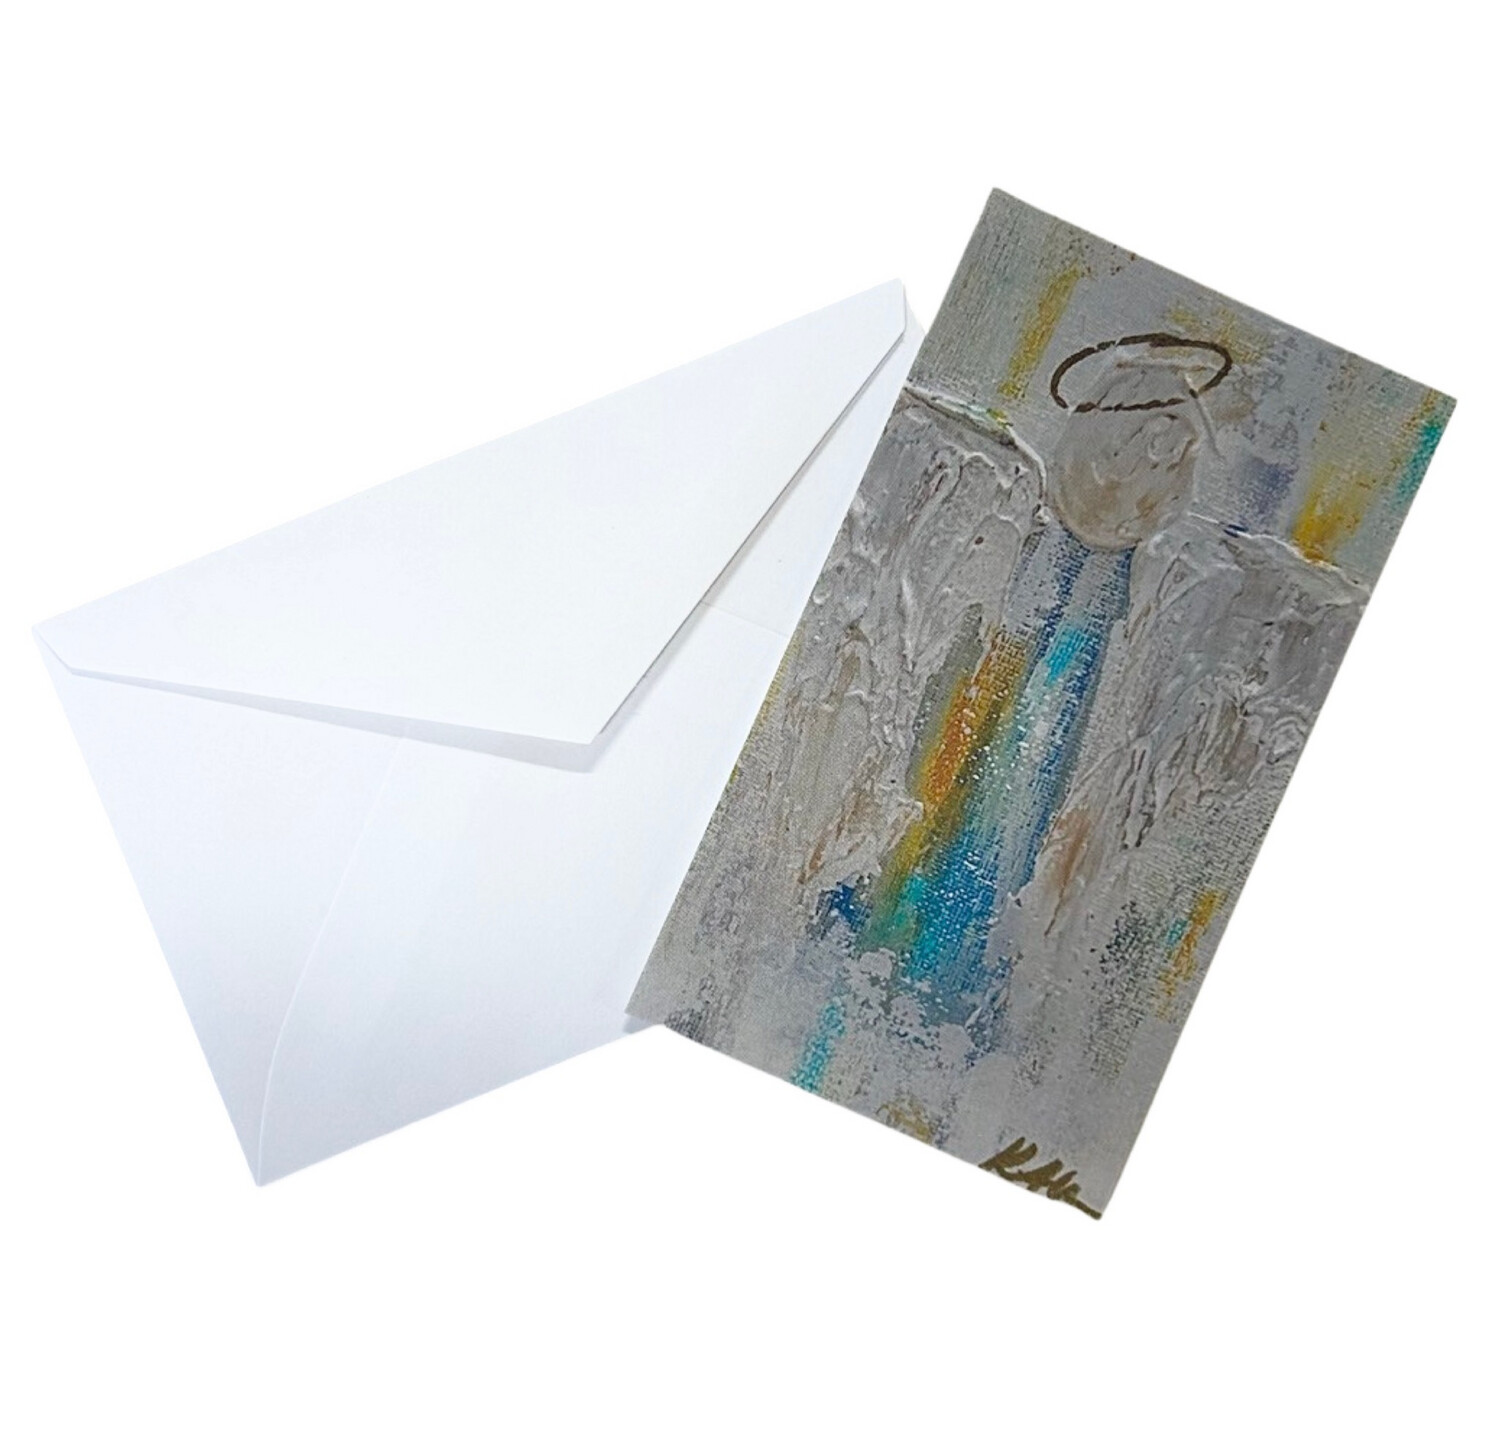 Enclosure Cards & Envelopes - Angels Among Us